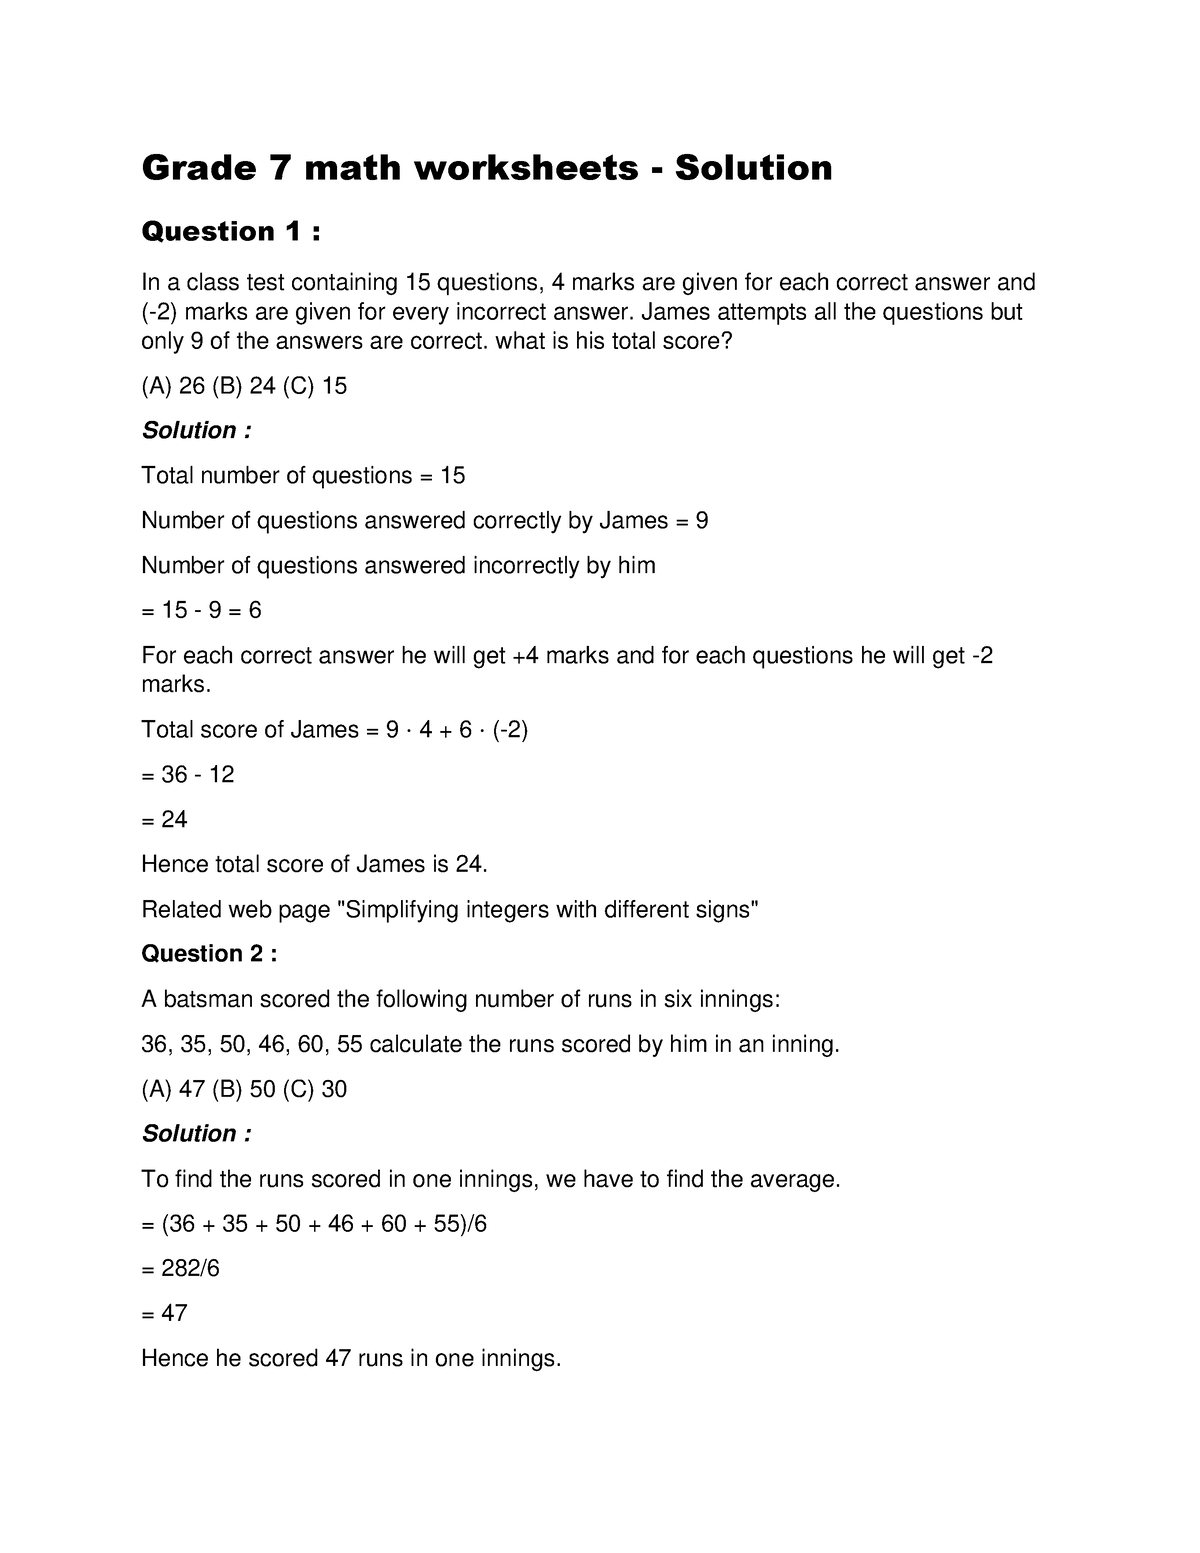 grade-7-math-worksheets-grade-7-math-worksheets-solution-question-1